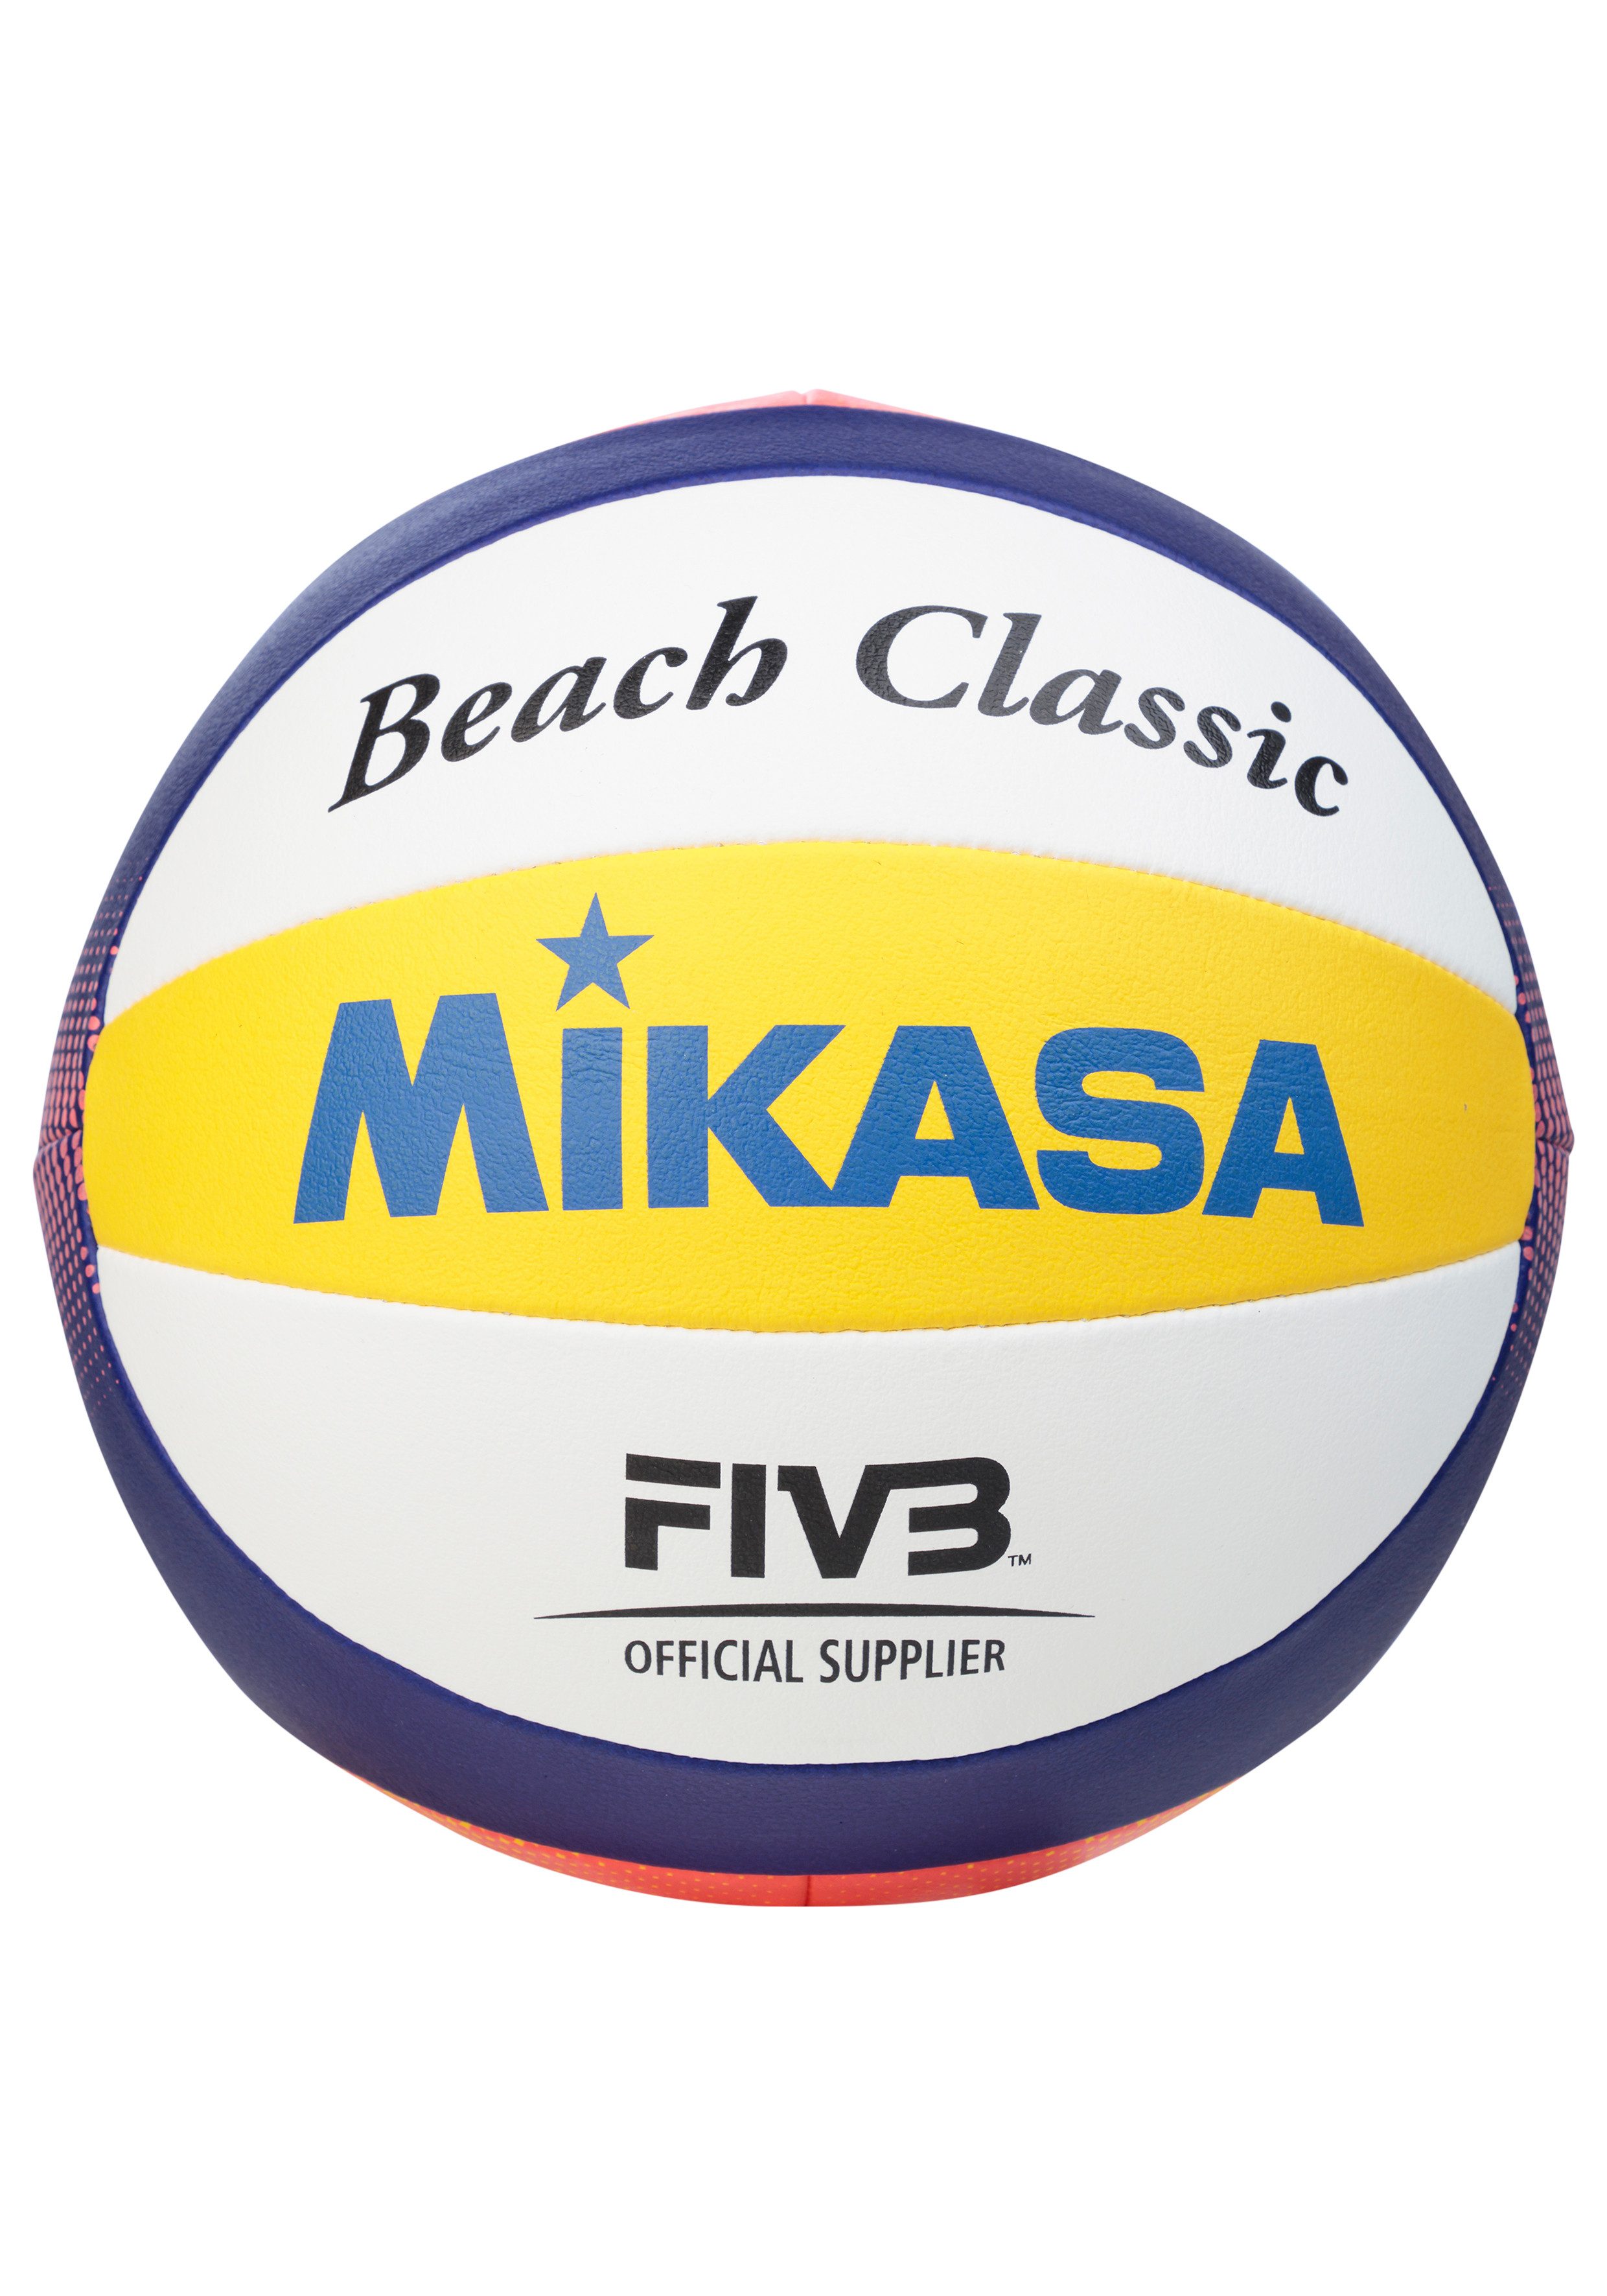 Mikasa Beachvolleyball BV551C Beach Classic